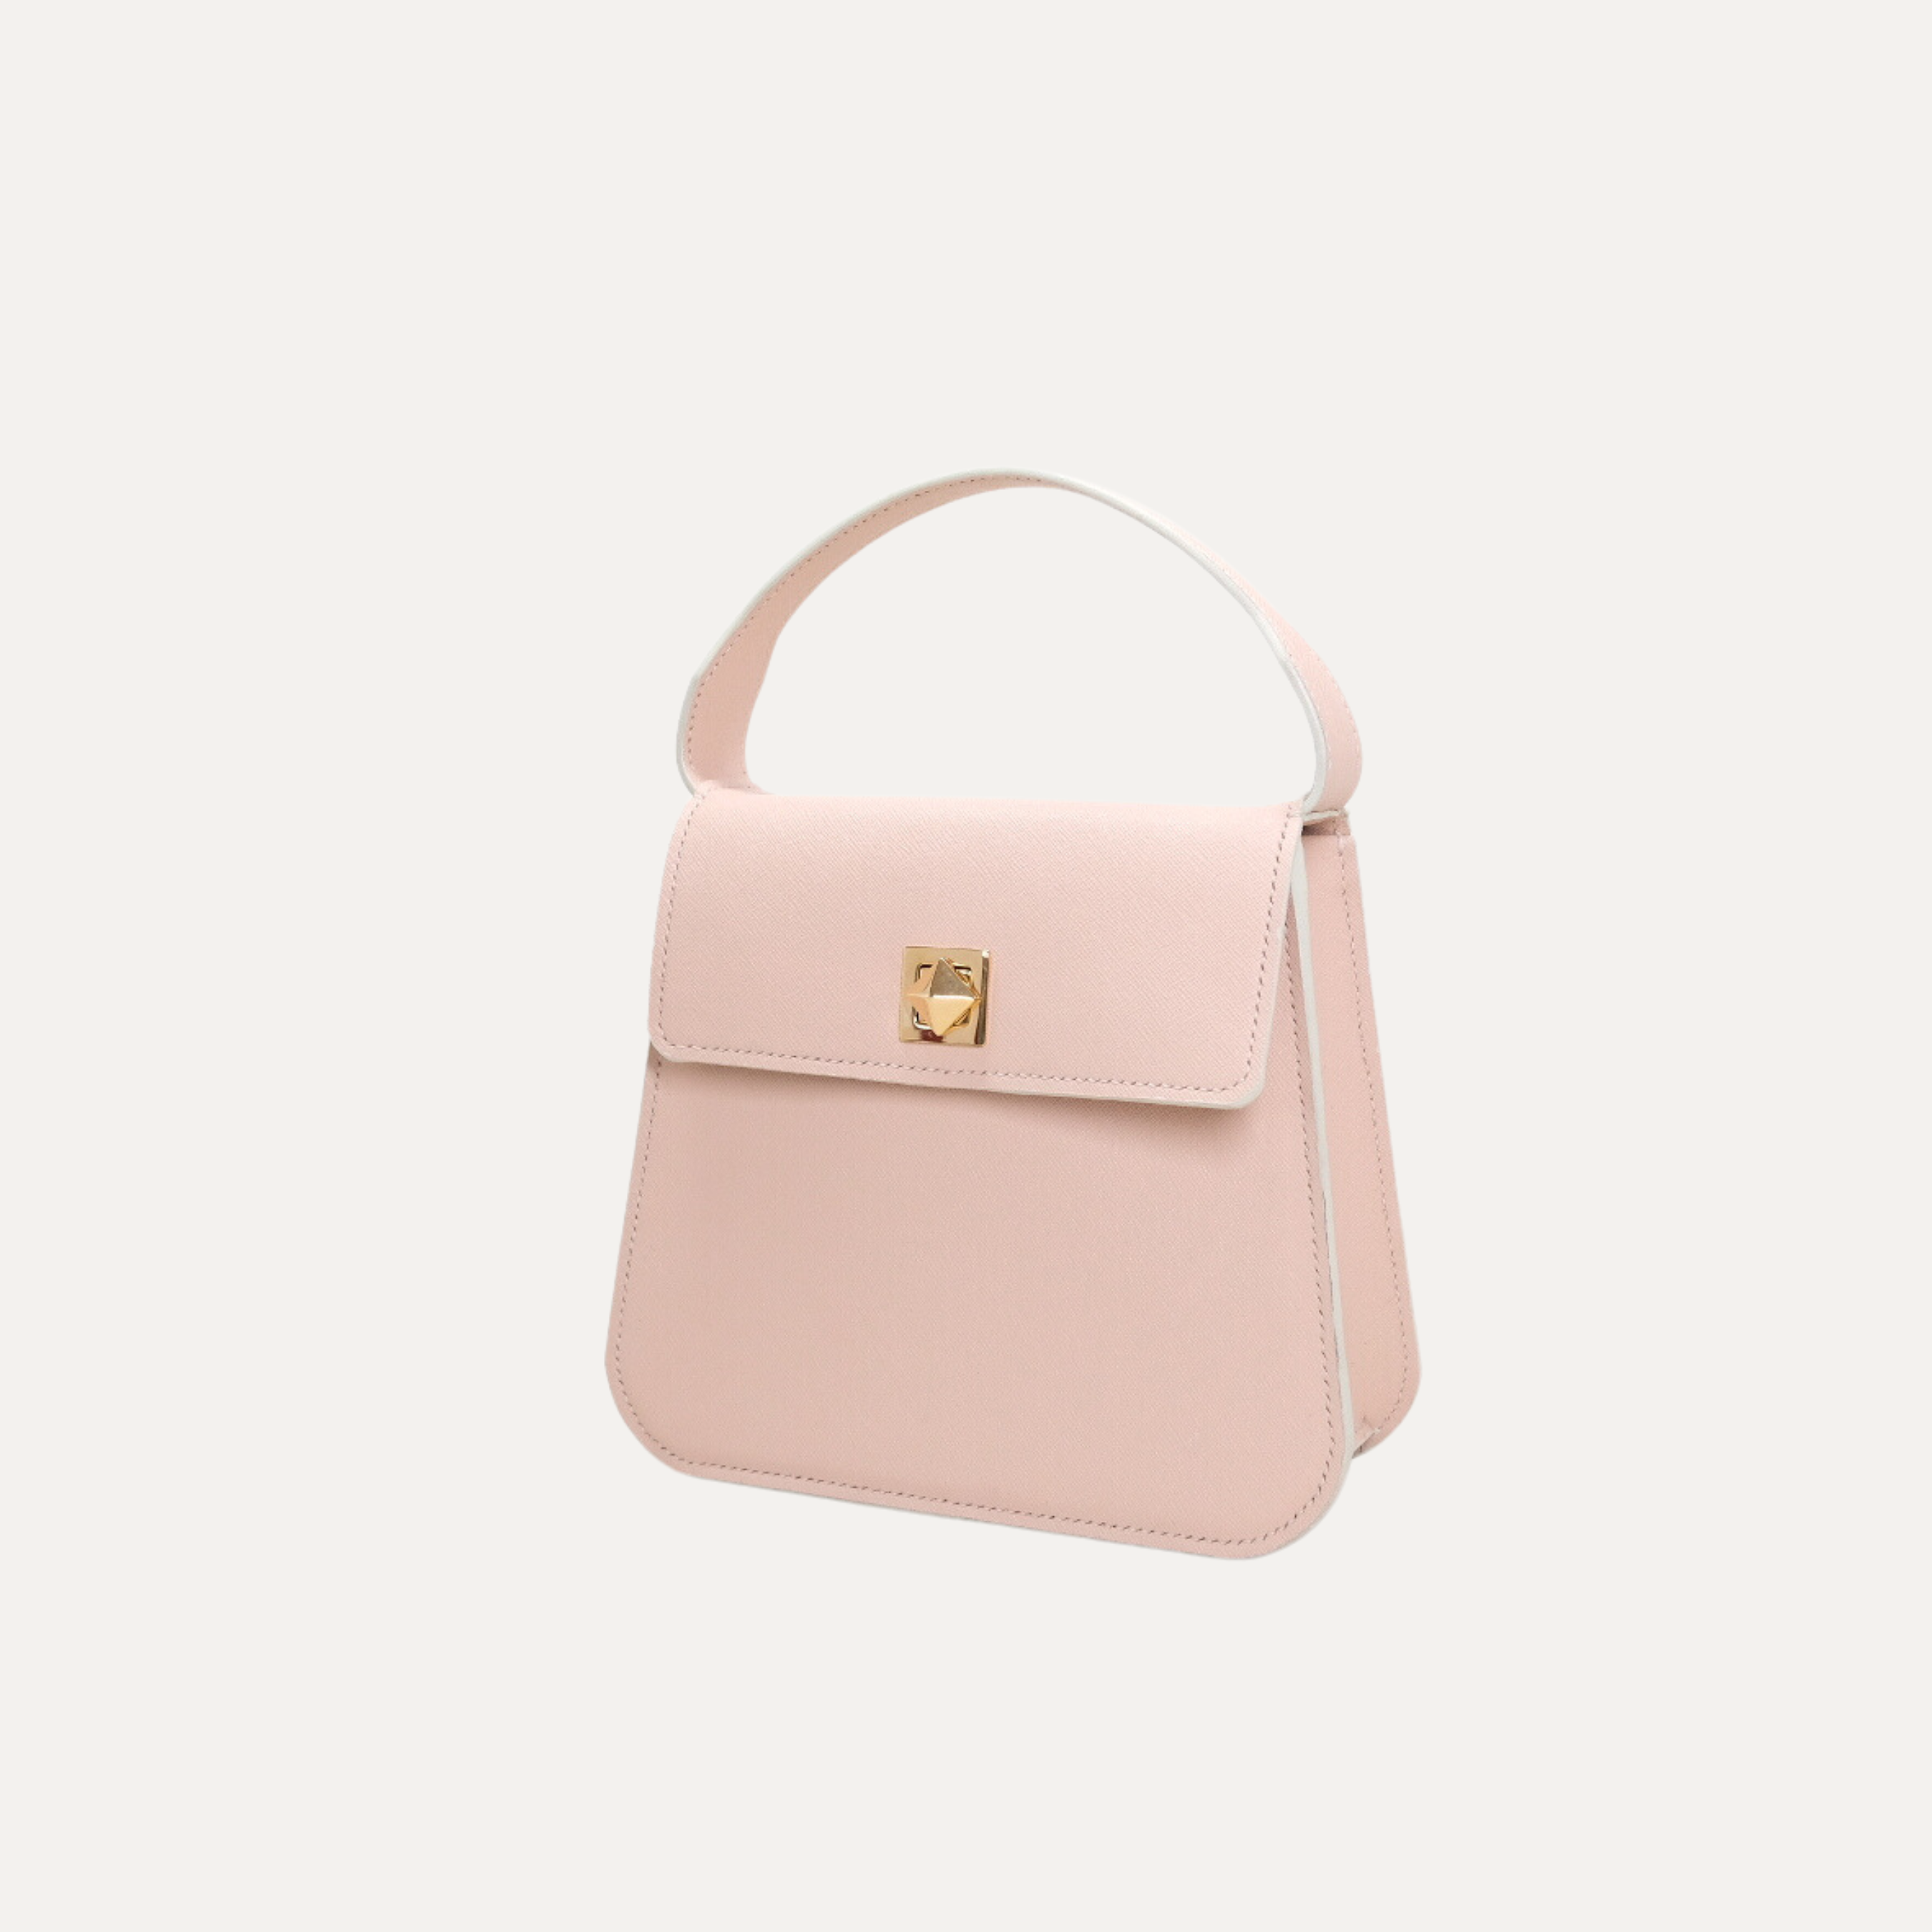 Blush pink genuine leather top-handle handbag made in Australia